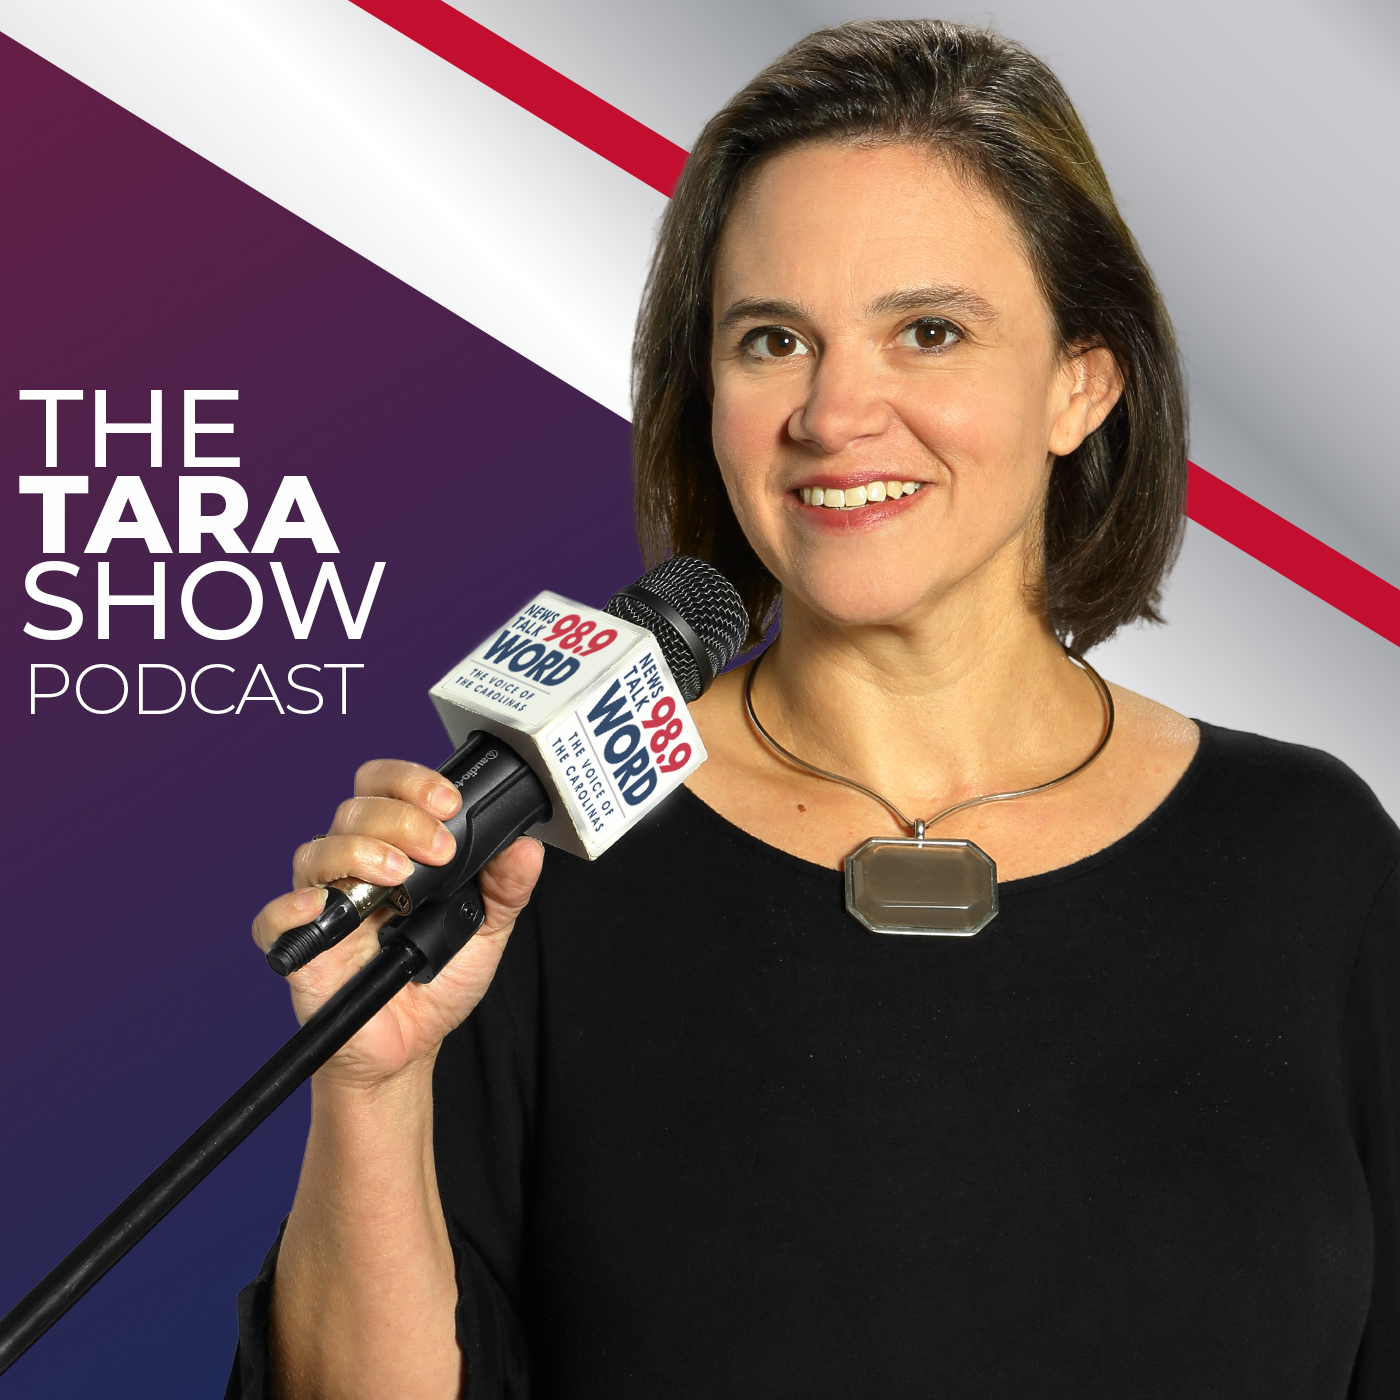 Hour 4: The Tara Show - “The New Microsoft AI” “No Crimes against Trump” “What Could Go Wrong | Bill Gates, Fauci can Covid” “The Trump Trials” 